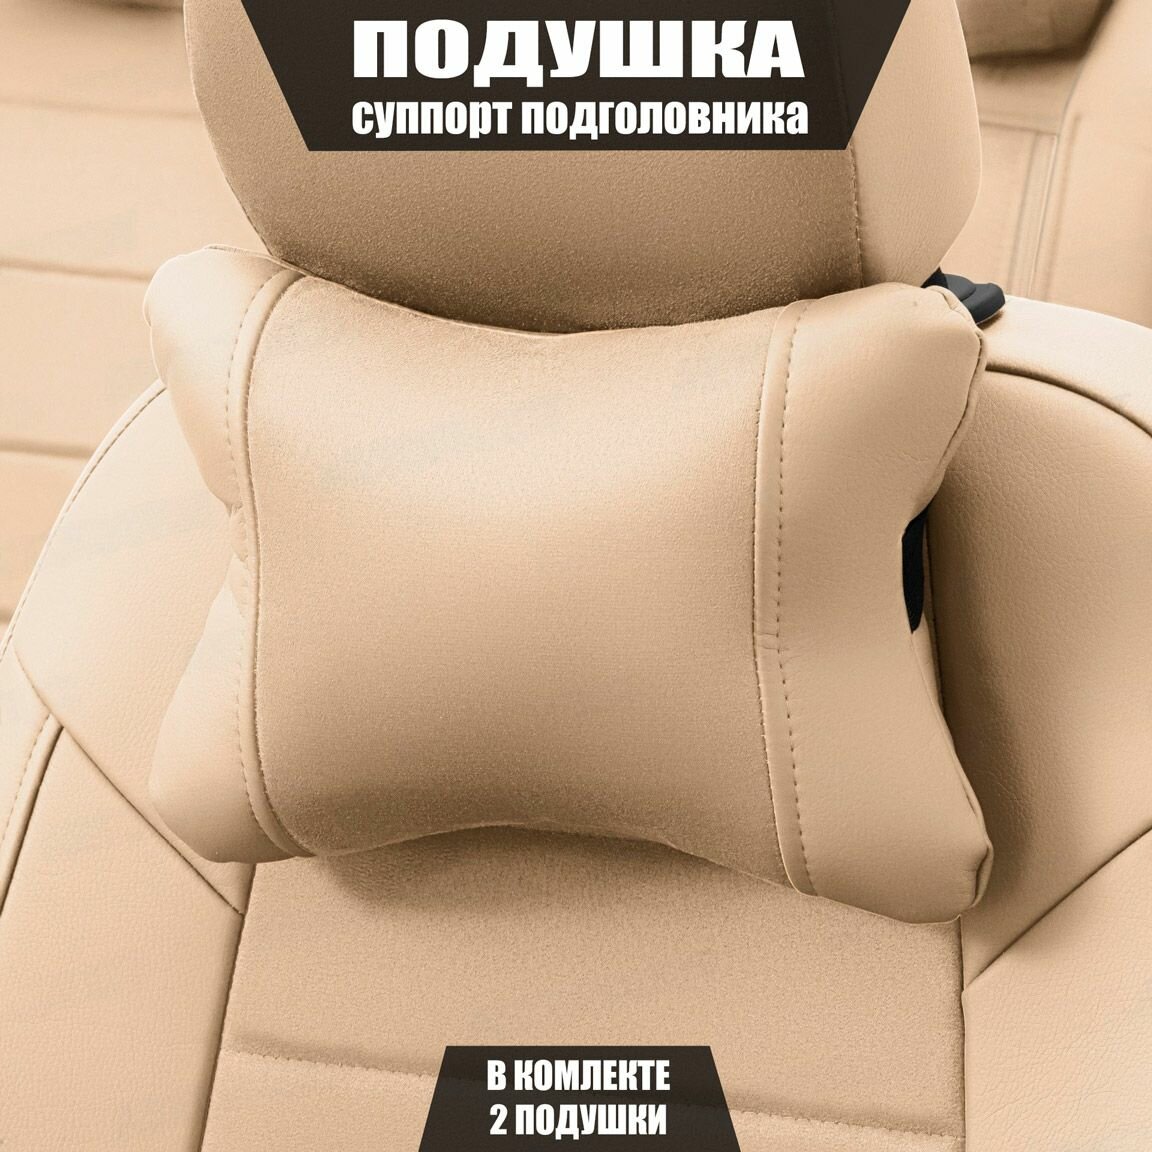 Подушки под шею (суппорт подголовника) для Сузуки Гранд Витара (1997 - 2001) внедорожник 3 двери / Suzuki Grand Vitara, Алькантара, 2 подушки, Бежевый